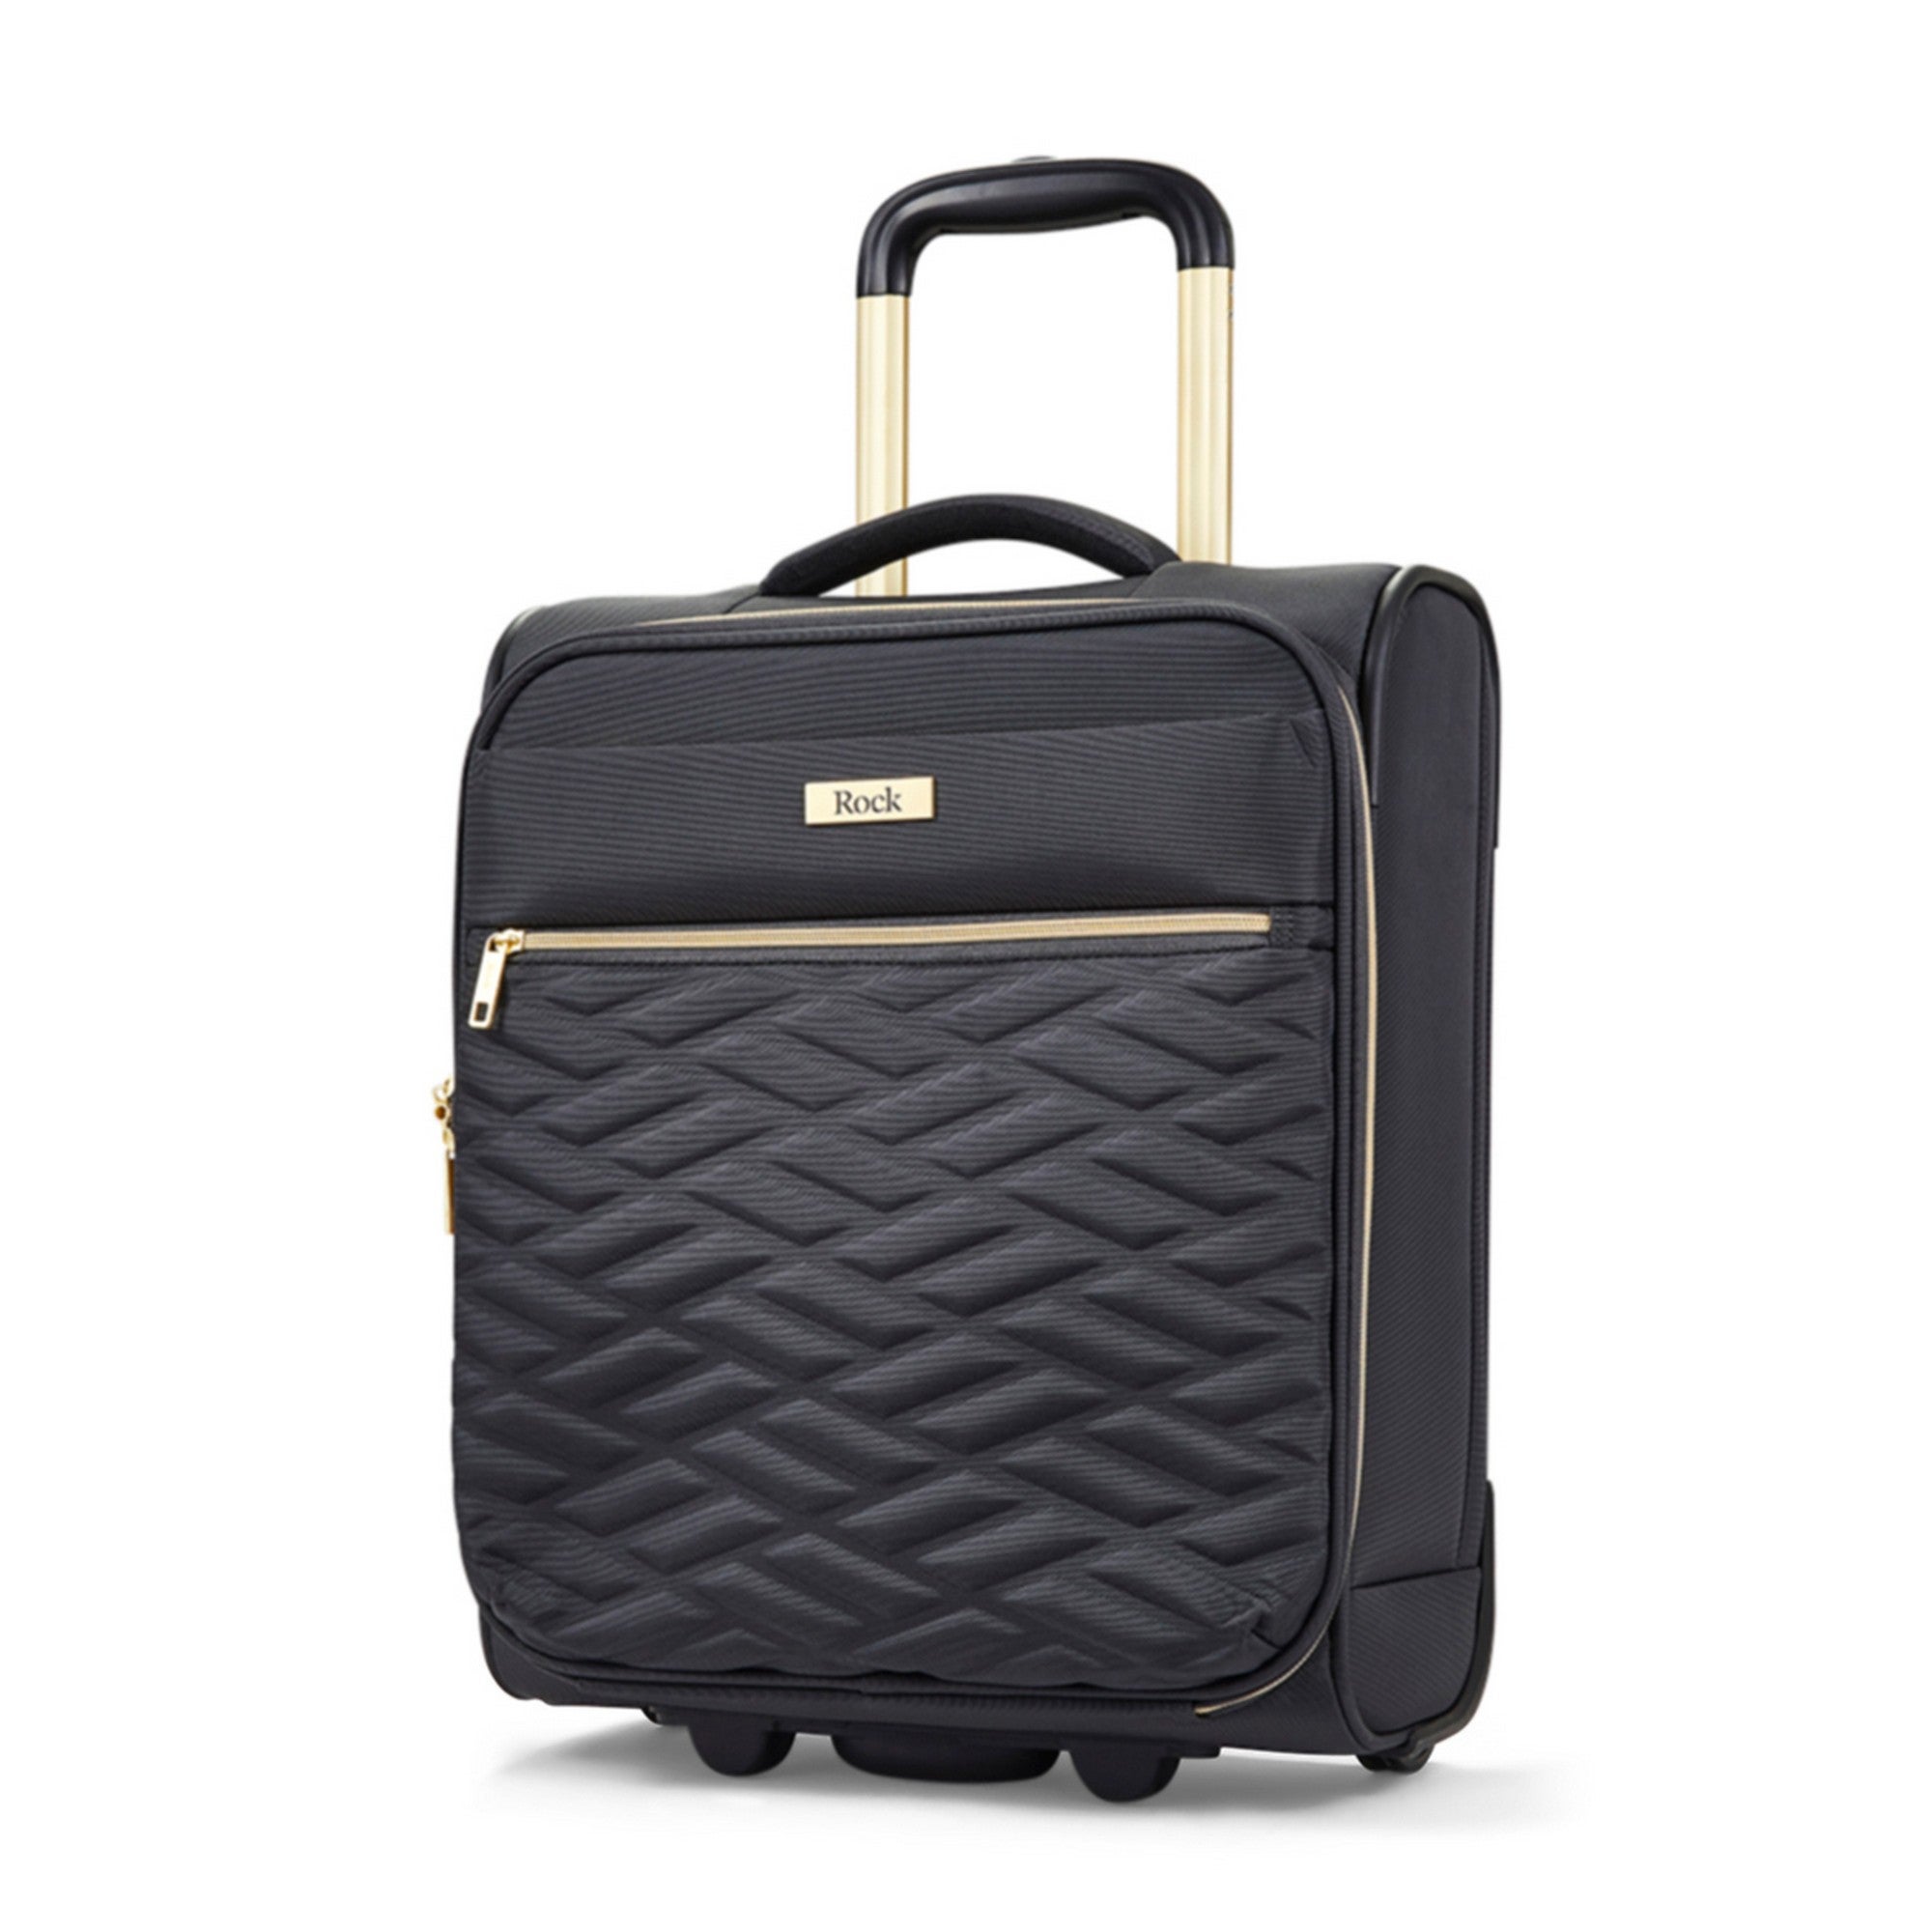 Rock Luggage Sloane Underseat Suitcase Charcoal